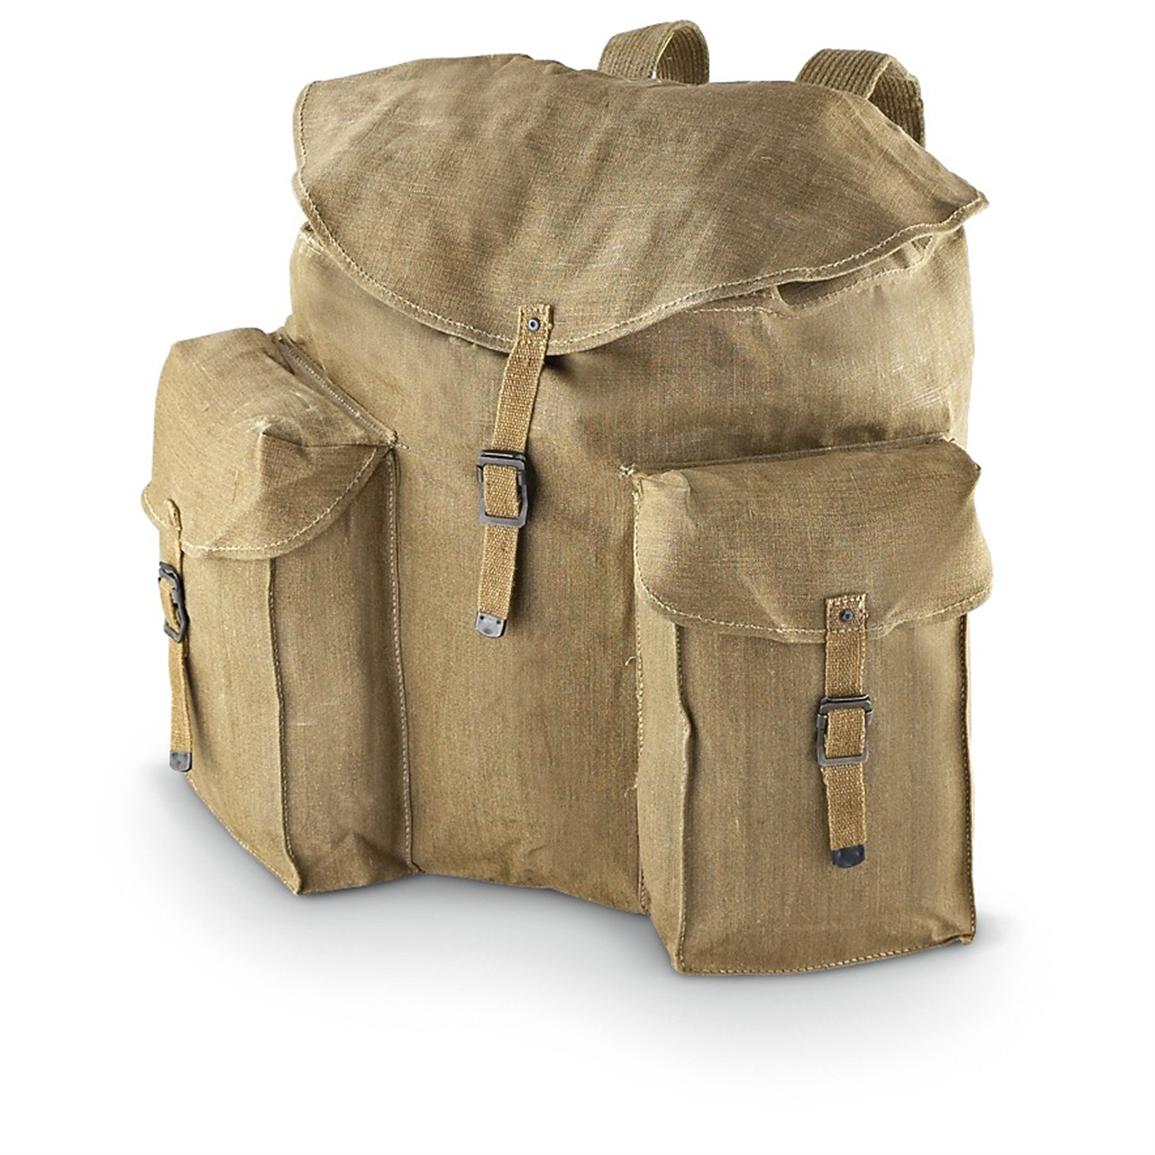 Used Italian Large Canvas Backpack - 182527, Rucksacks & Backpacks at Sportsman&#39;s Guide